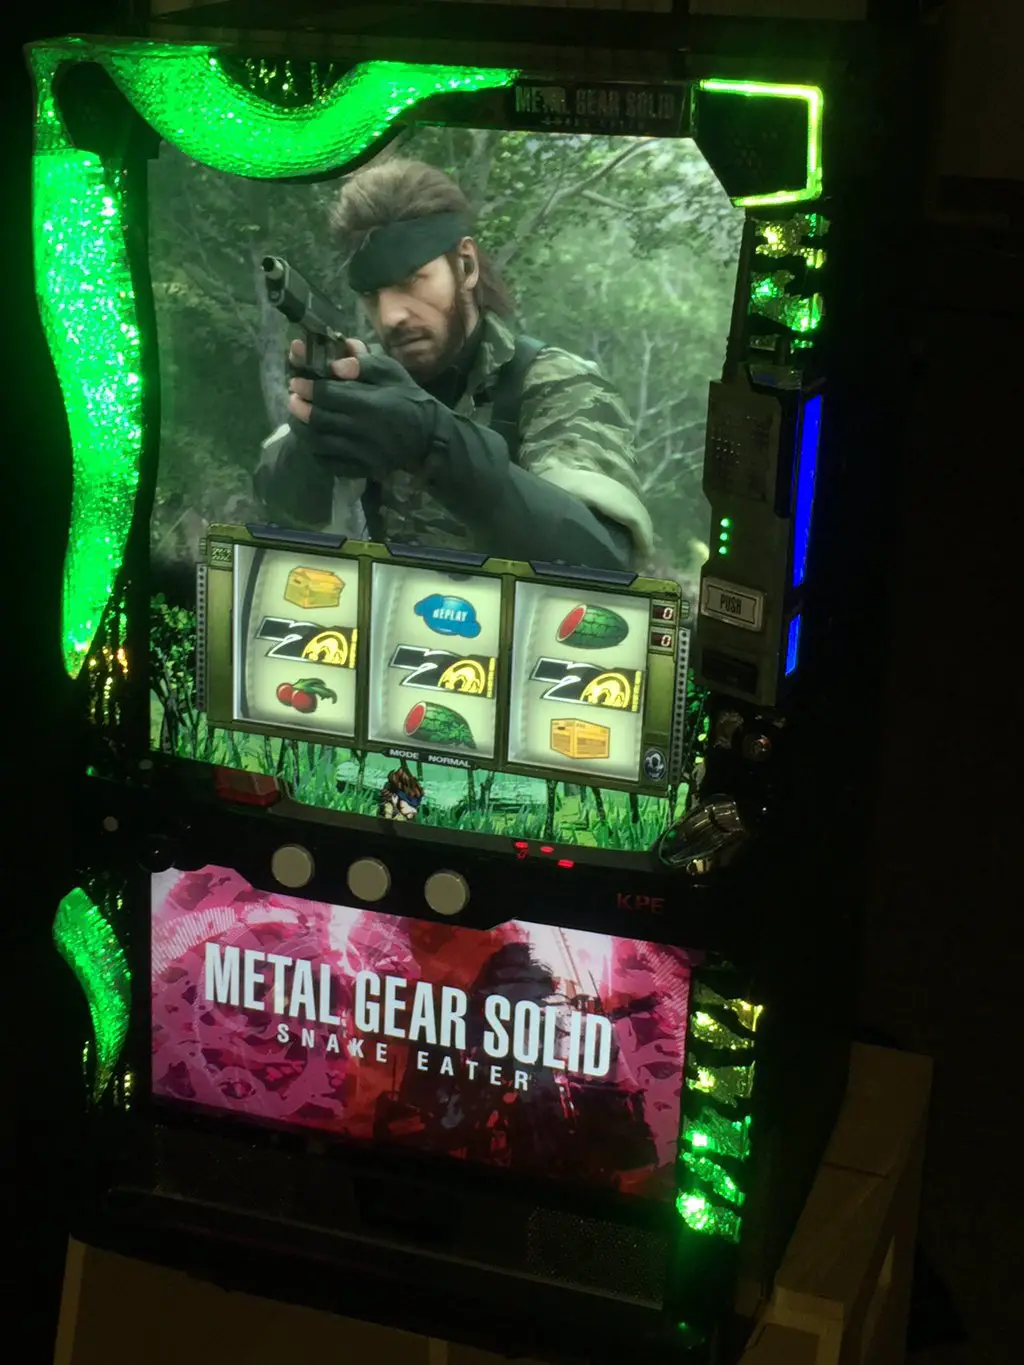 Metal gear solid snake eater pachinko. Metal Gear Solid 3 